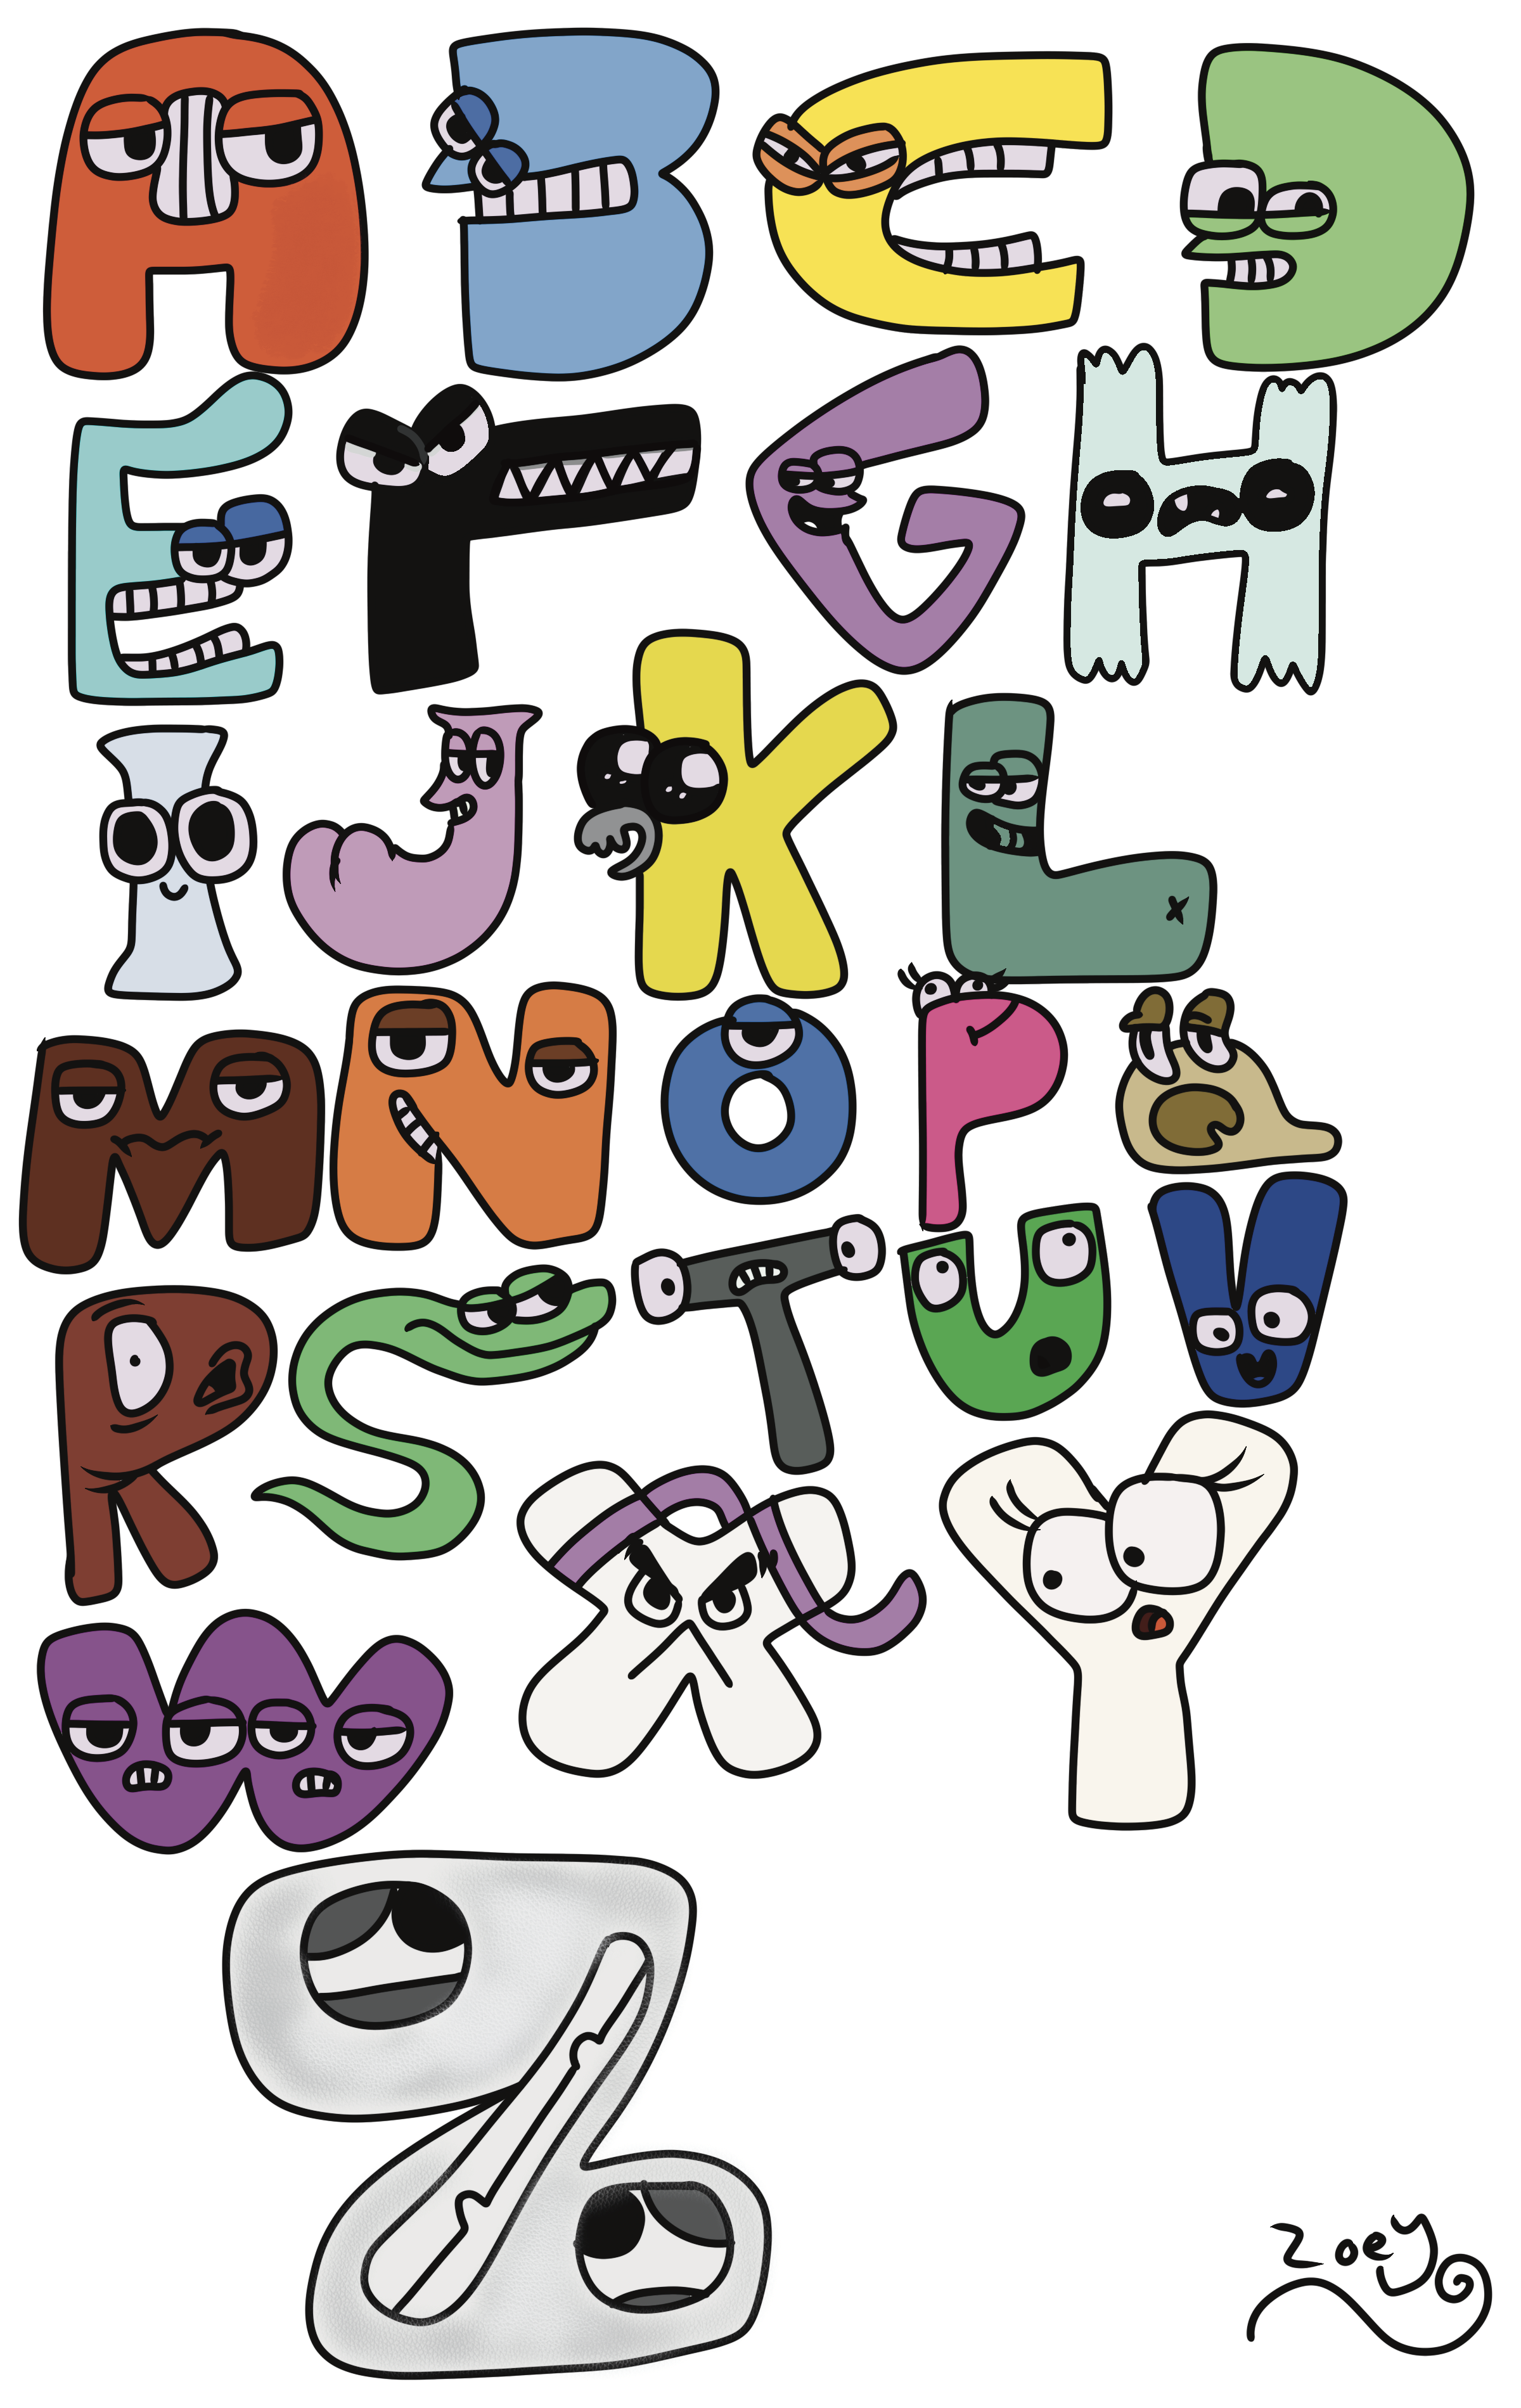 More alphabet lore comic by AxelPurpleAxolotl on DeviantArt